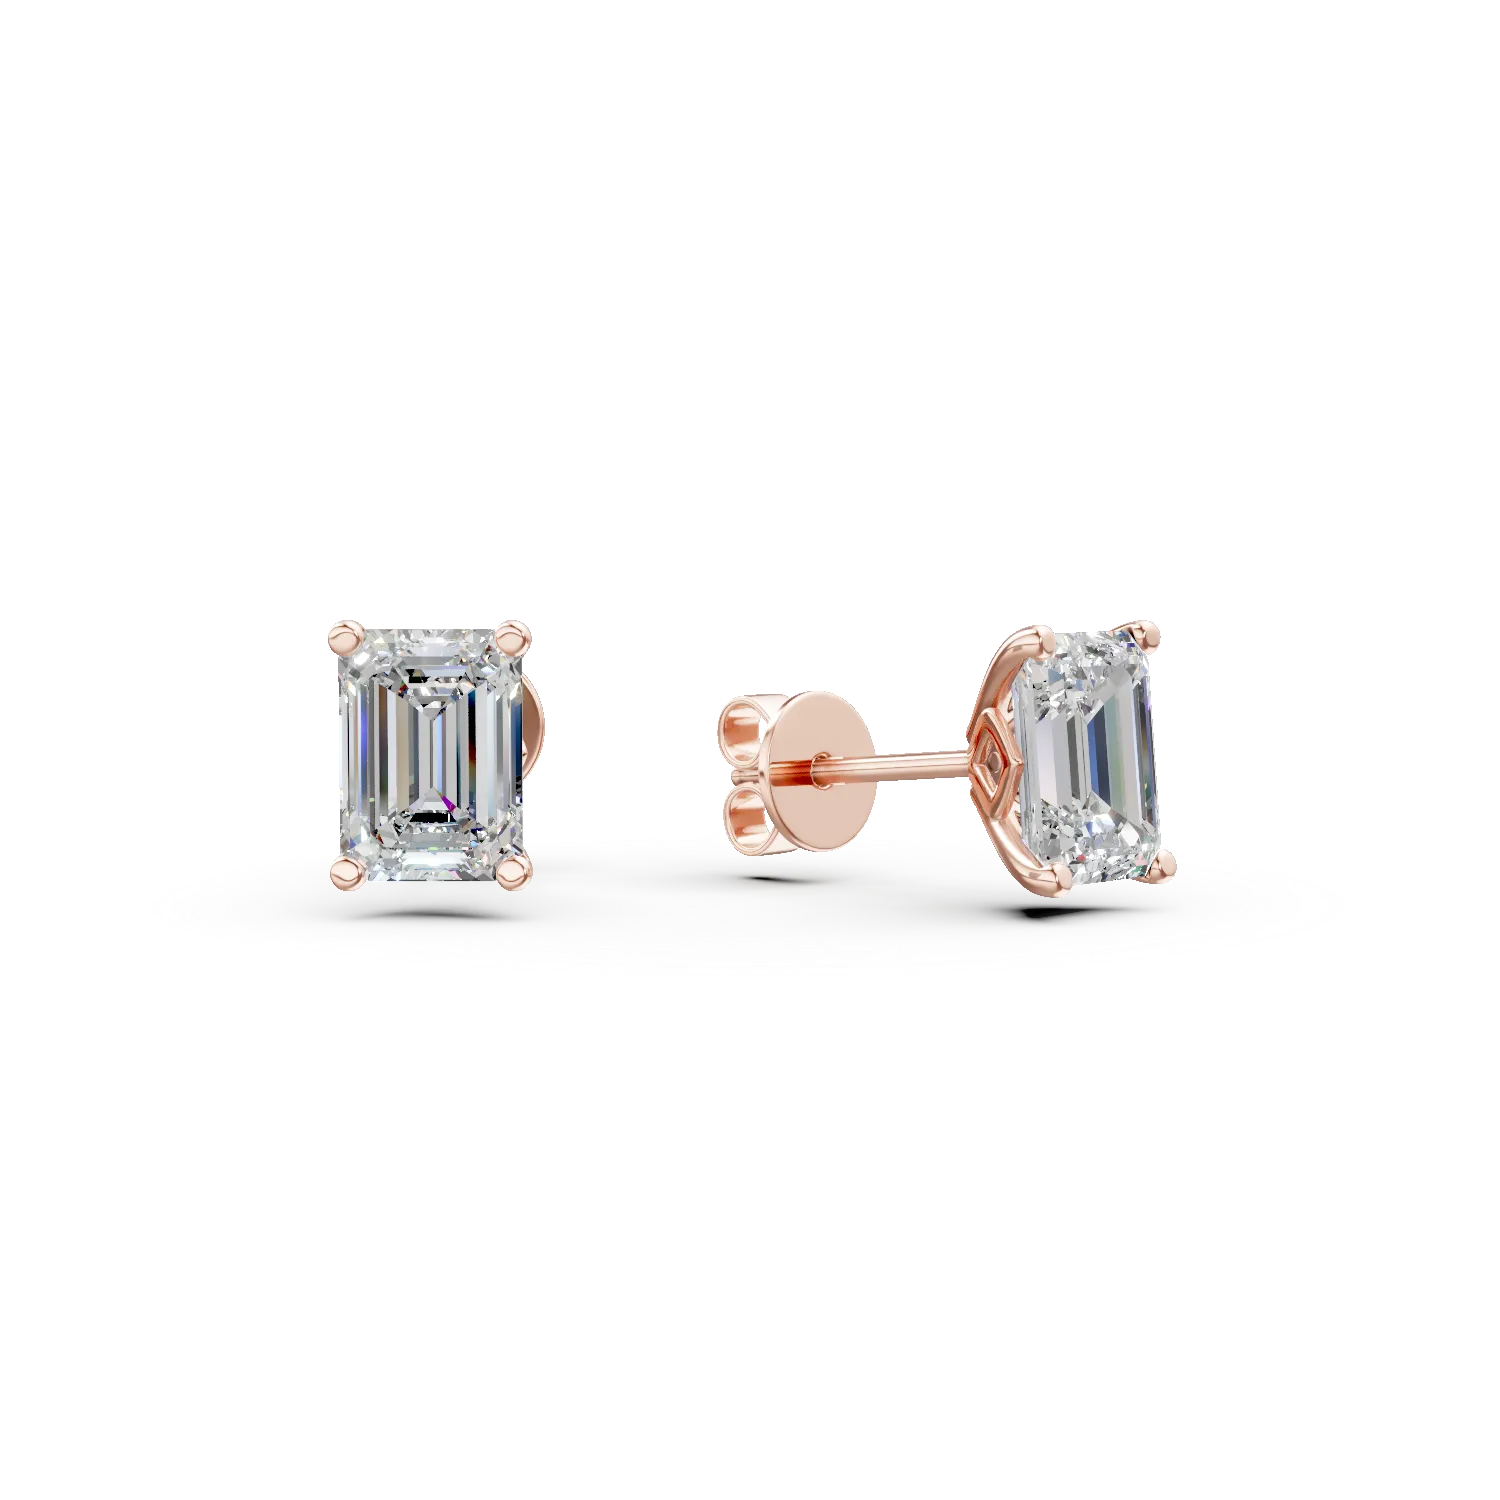 Cercei din aur roz cu diamante solitaire de 1ct create in laborator, taietura emerald